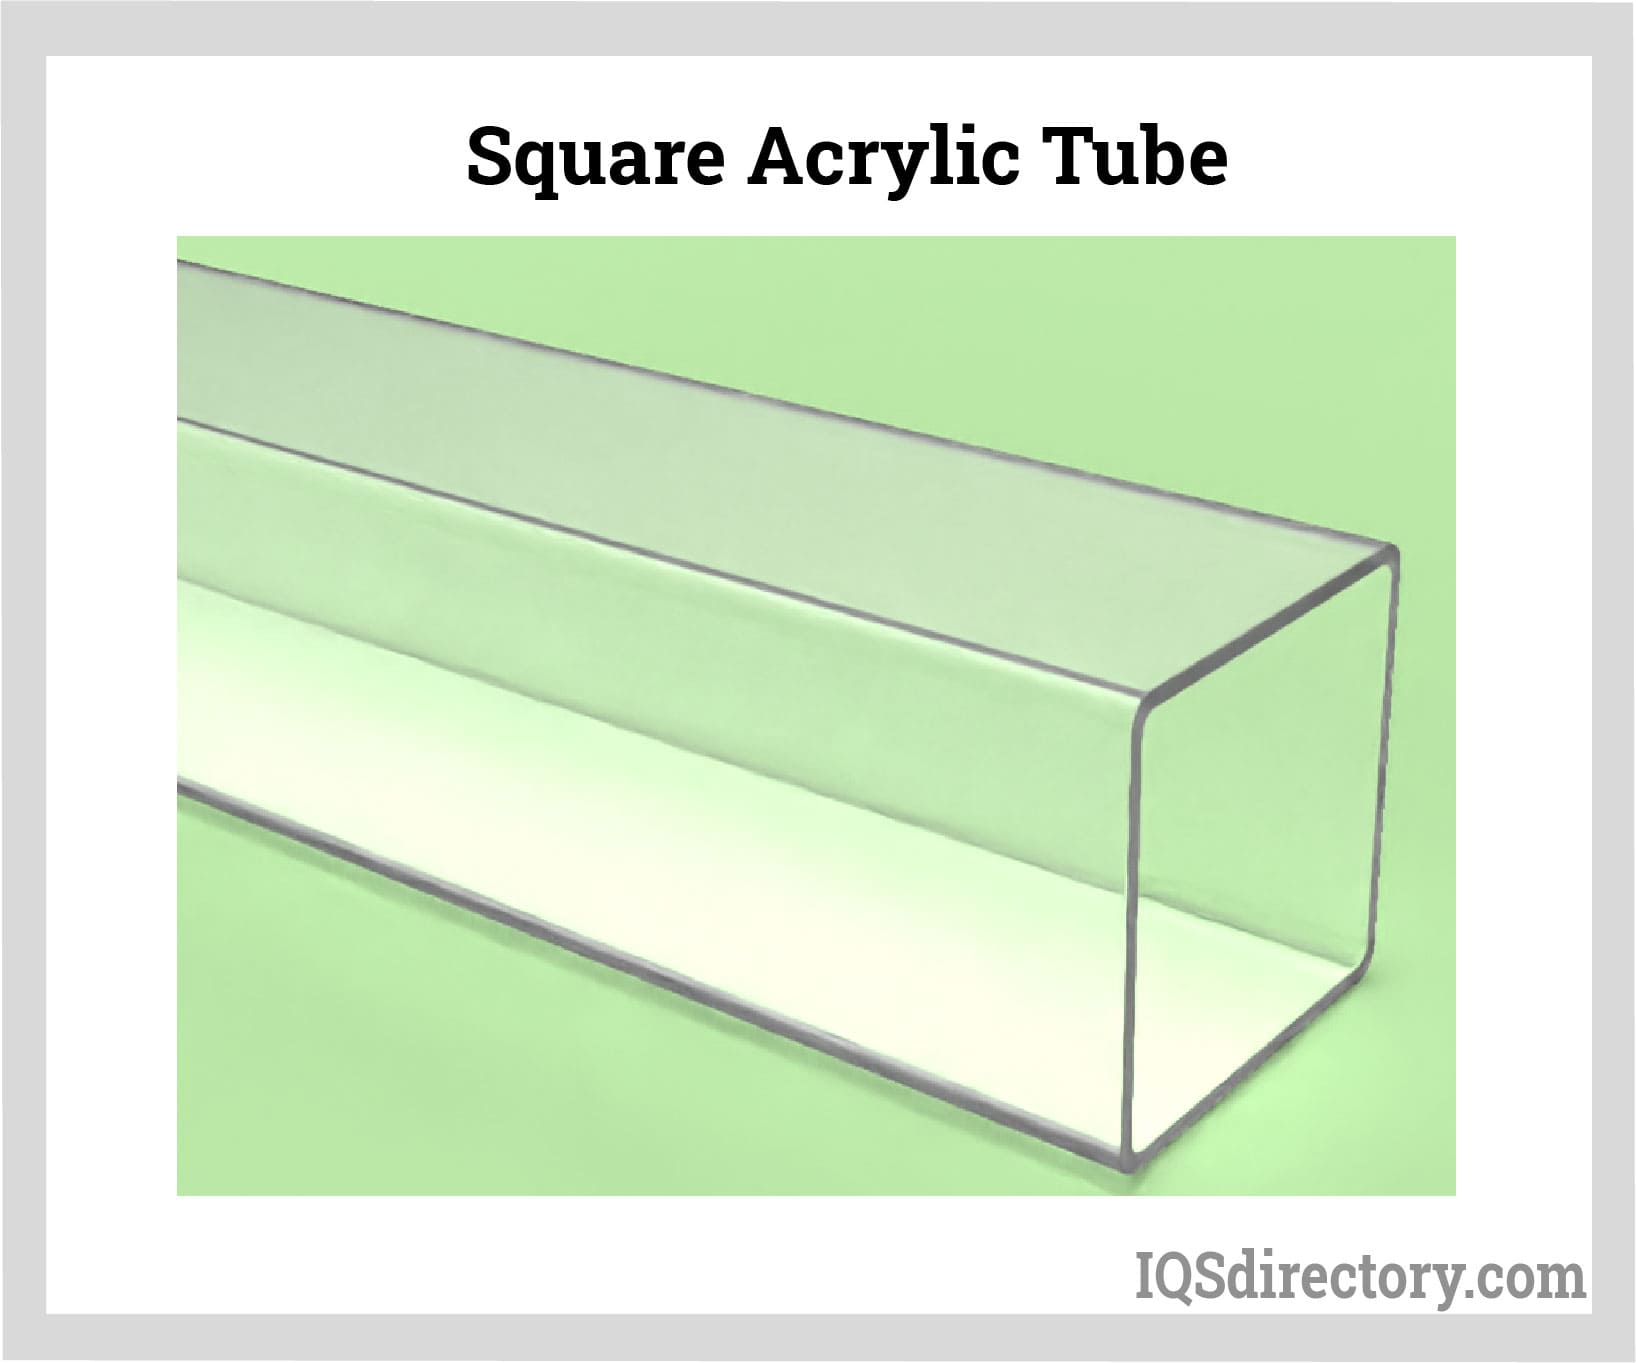 Square Acrylic Tube